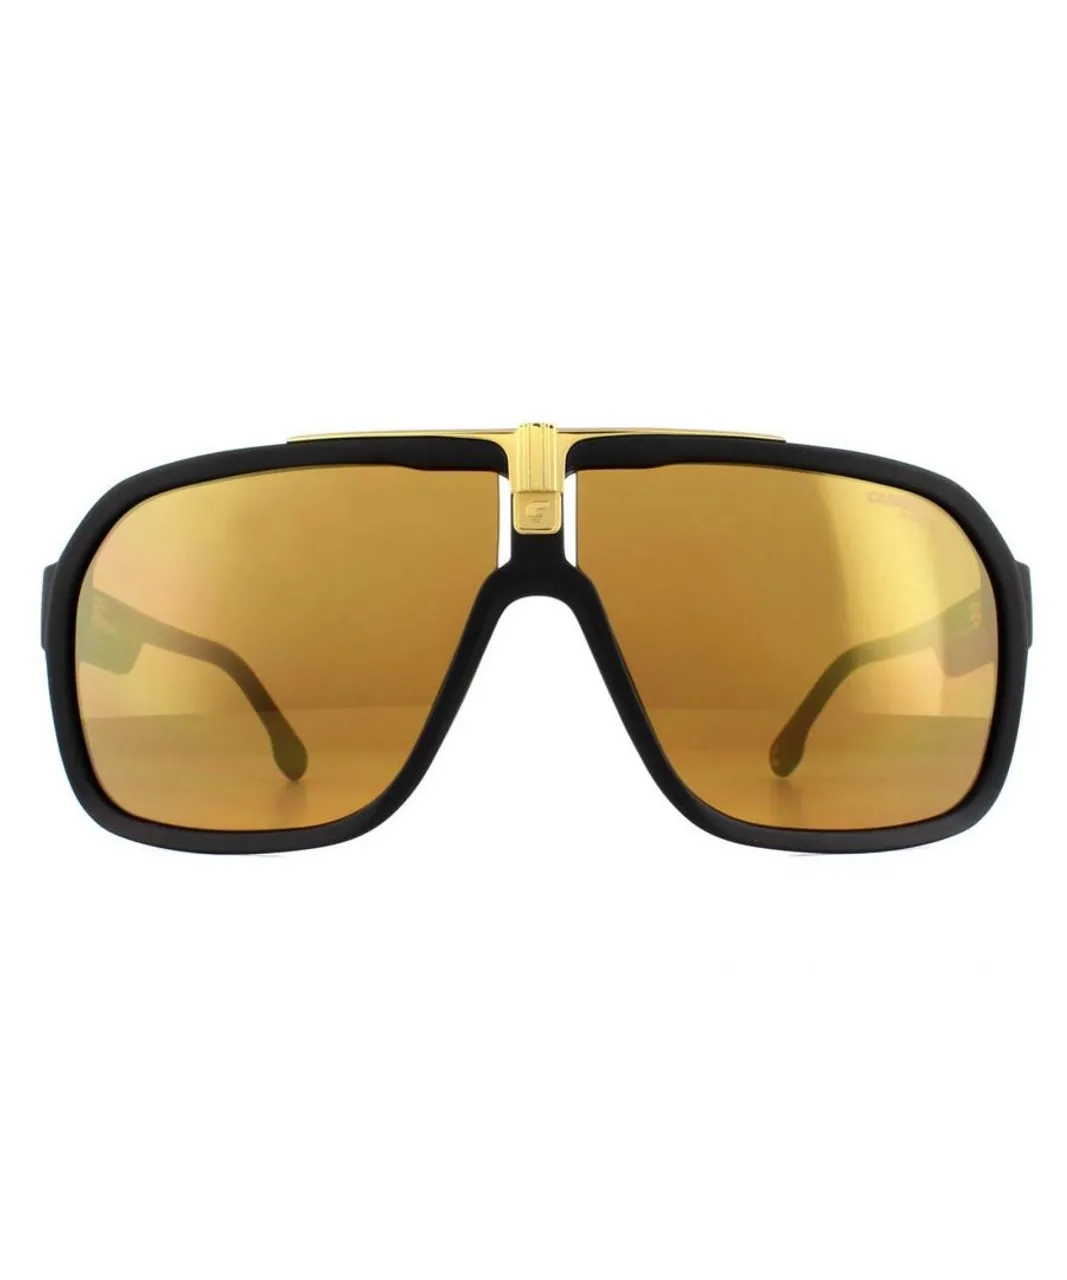 Carrera Aviator Mens Black Gold Mirror Sunglasses